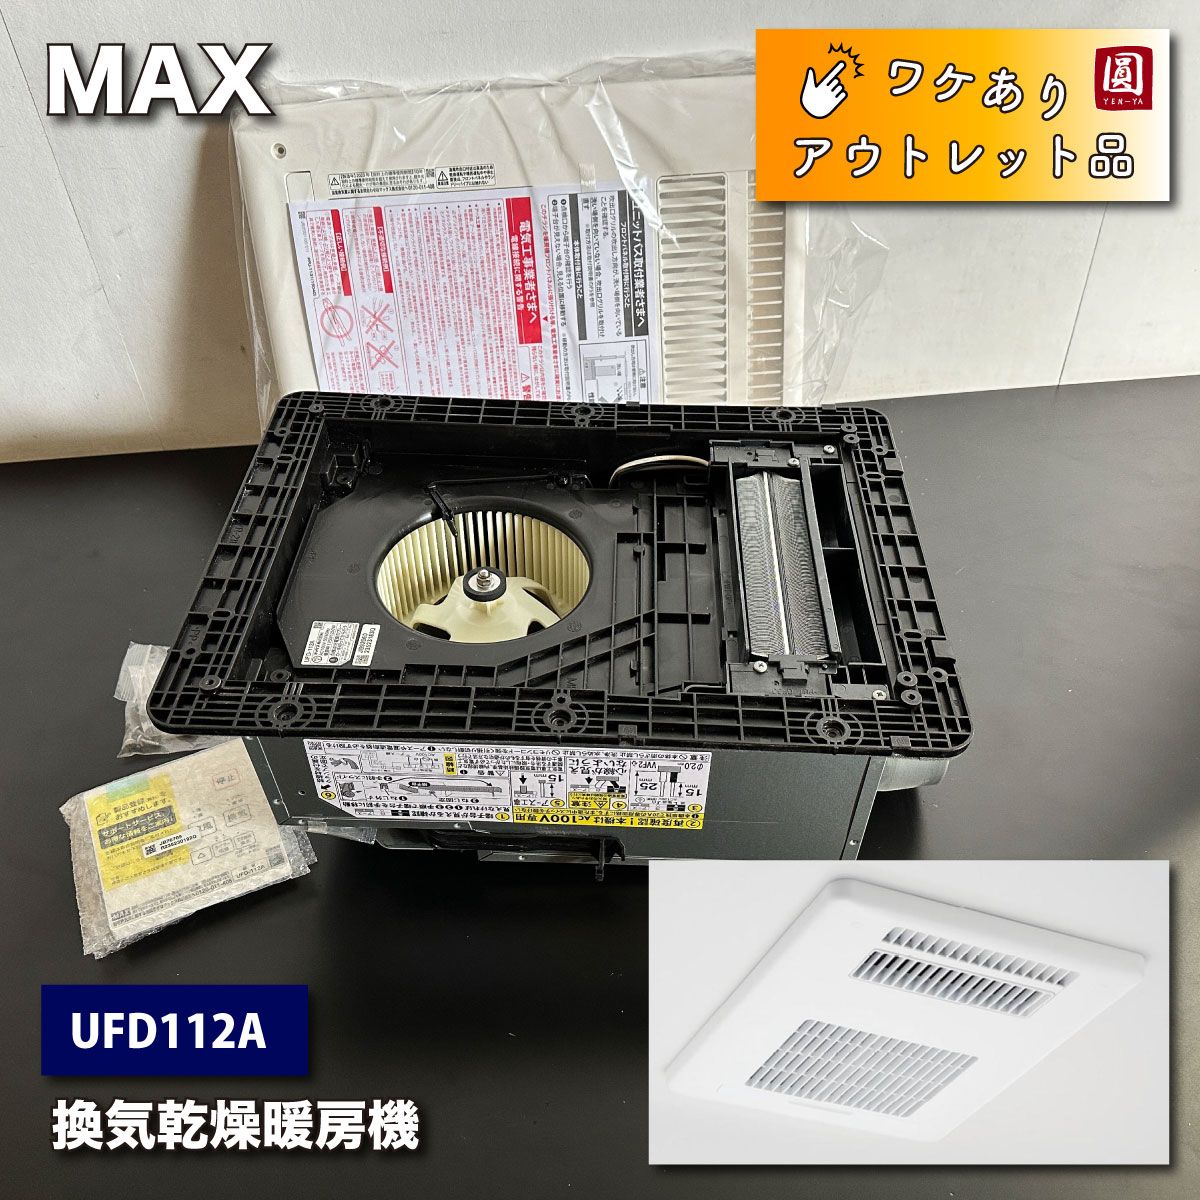 MAX 換気乾燥暖房機 UFD-112A - 冷暖房器具、空調家電